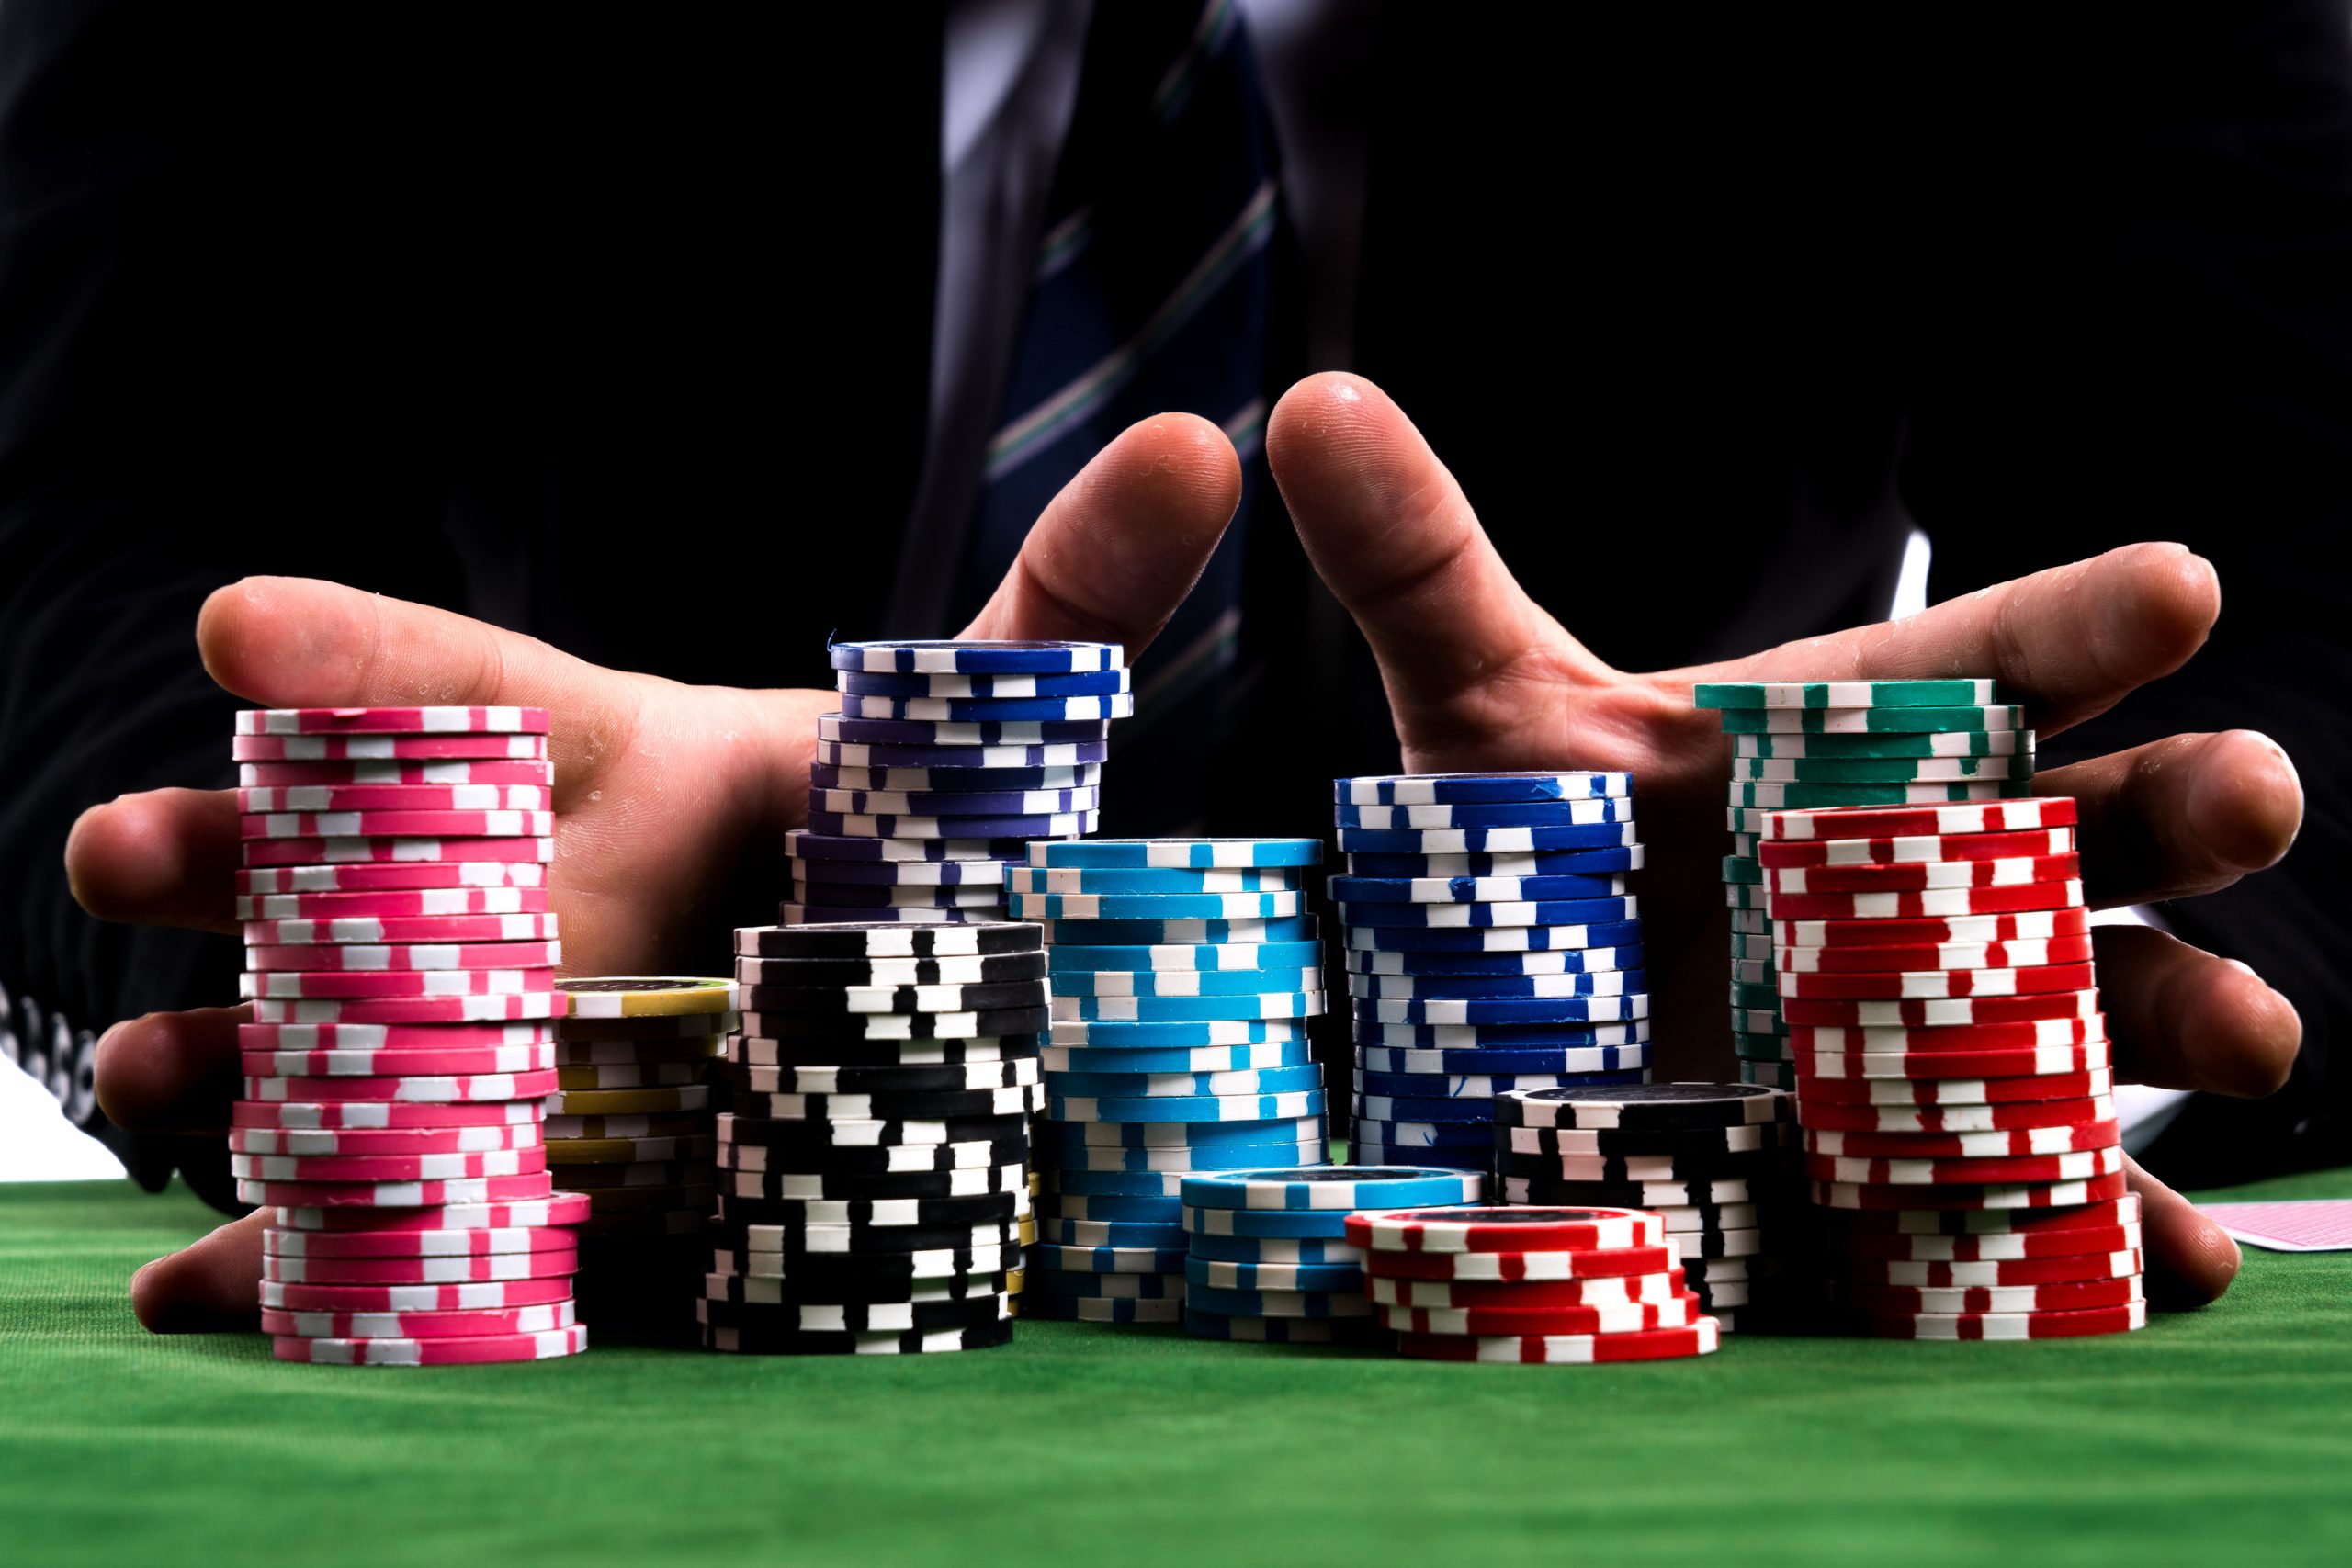 Considerable social advantages of online gambling